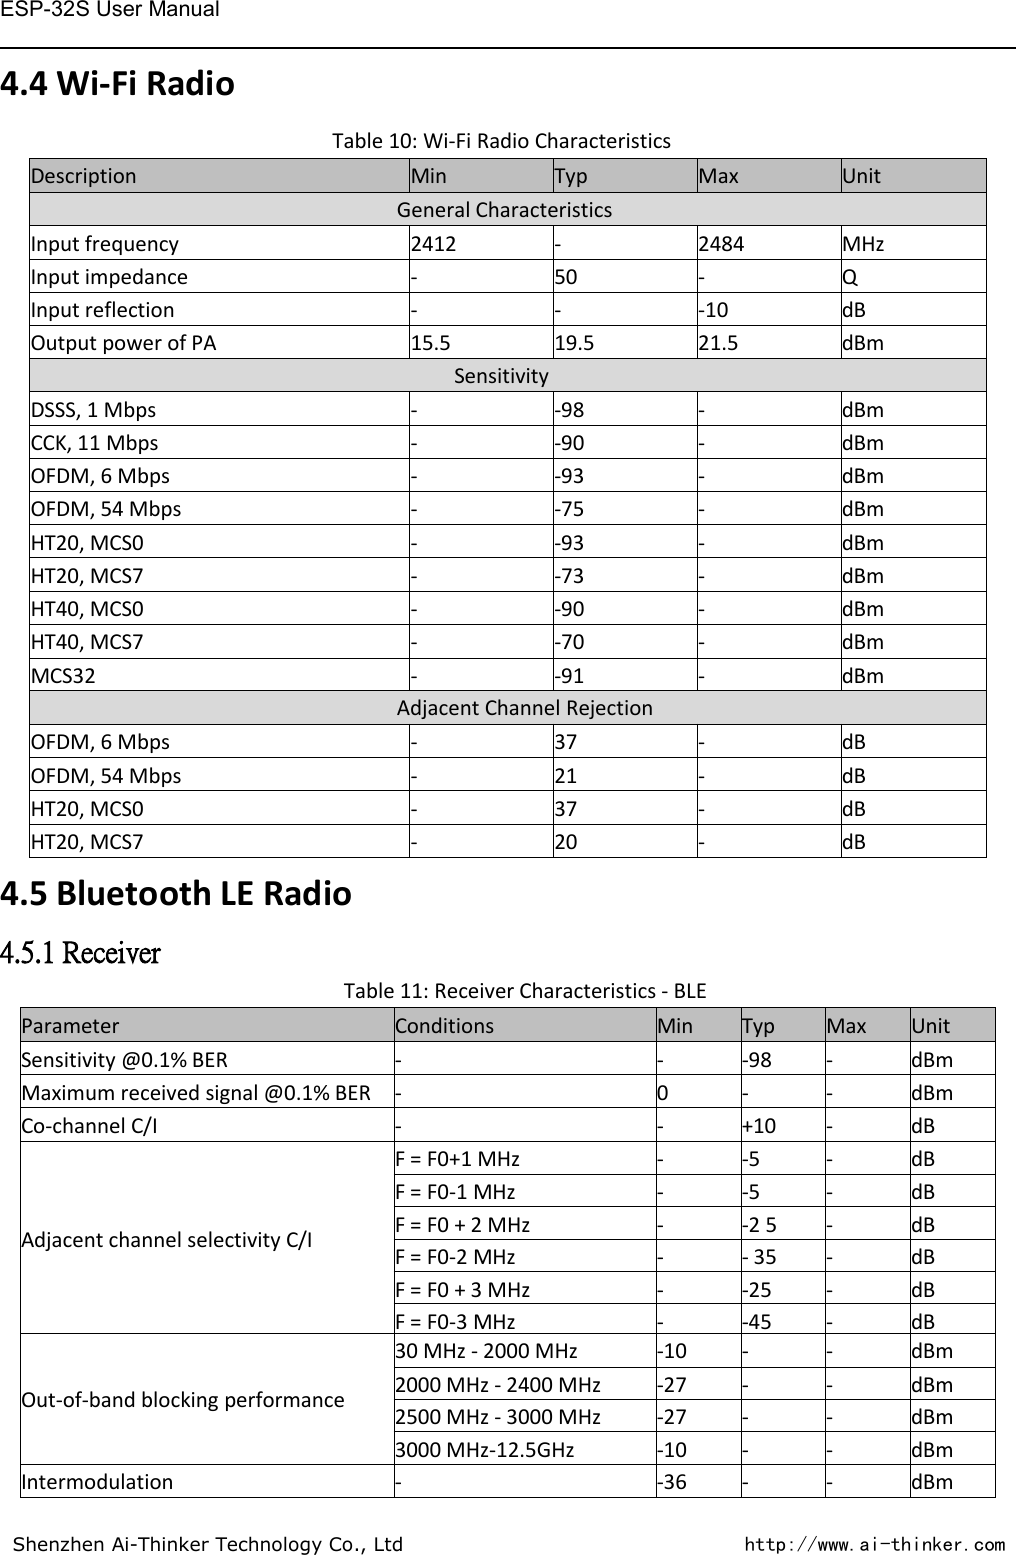 ESP-32S User ManualShenzhen Ai-Thinker Technology Co., Ltd http://www.ai-thinker.com4.4 Wi-Fi RadioTable 10: Wi-Fi Radio CharacteristicsDescriptionMinTypMaxUnitGeneral CharacteristicsInput frequency2412-2484MHzInput impedance-50-QInput reflection---10dBOutput power of PA15.519.521.5dBmSensitivityDSSS, 1 Mbps--98-dBmCCK, 11 Mbps--90-dBmOFDM, 6 Mbps--93-dBmOFDM, 54 Mbps--75-dBmHT20, MCS0--93-dBmHT20, MCS7--73-dBmHT40, MCS0--90-dBmHT40, MCS7--70-dBmMCS32--91-dBmAdjacent Channel RejectionOFDM, 6 Mbps-37-dBOFDM, 54 Mbps-21-dBHT20, MCS0-37-dBHT20, MCS7-20-dB4.5 Bluetooth LE Radio4.5.1 ReceiverTable 11: Receiver Characteristics - BLEParameterConditionsMinTypMaxUnitSensitivity @0.1% BER---98-dBmMaximum received signal @0.1% BER-0--dBmCo-channel C/I--+10-dBF = F0+1 MHz--5-dBF = F0-1 MHz--5-dBAdjacent channel selectivity C/IF = F0 + 2 MHz--2 5-dBF = F0-2 MHz-- 35-dBF = F0 + 3 MHz--25-dBF = F0-3 MHz--45-dB30 MHz - 2000 MHz-10--dBmOut-of-band blocking performance2000 MHz - 2400 MHz-27--dBm2500 MHz - 3000 MHz-27--dBm3000 MHz-12.5GHz-10--dBmIntermodulation--36--dBm